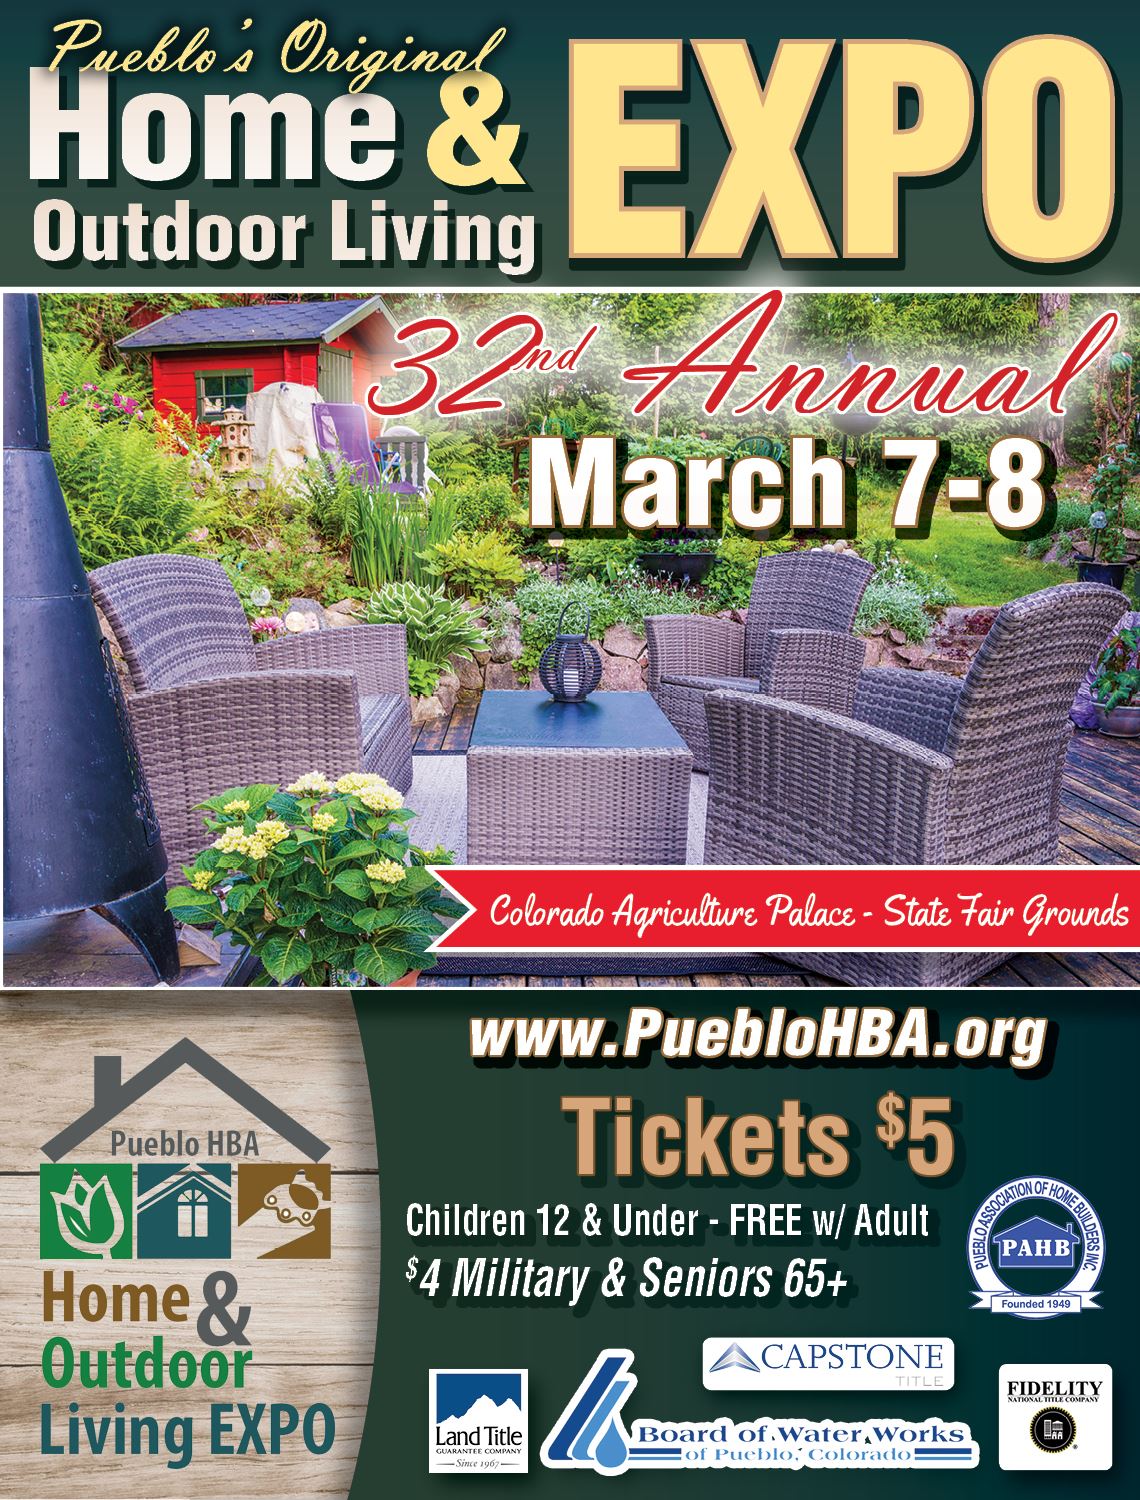 Home & Outdoor Living Expo